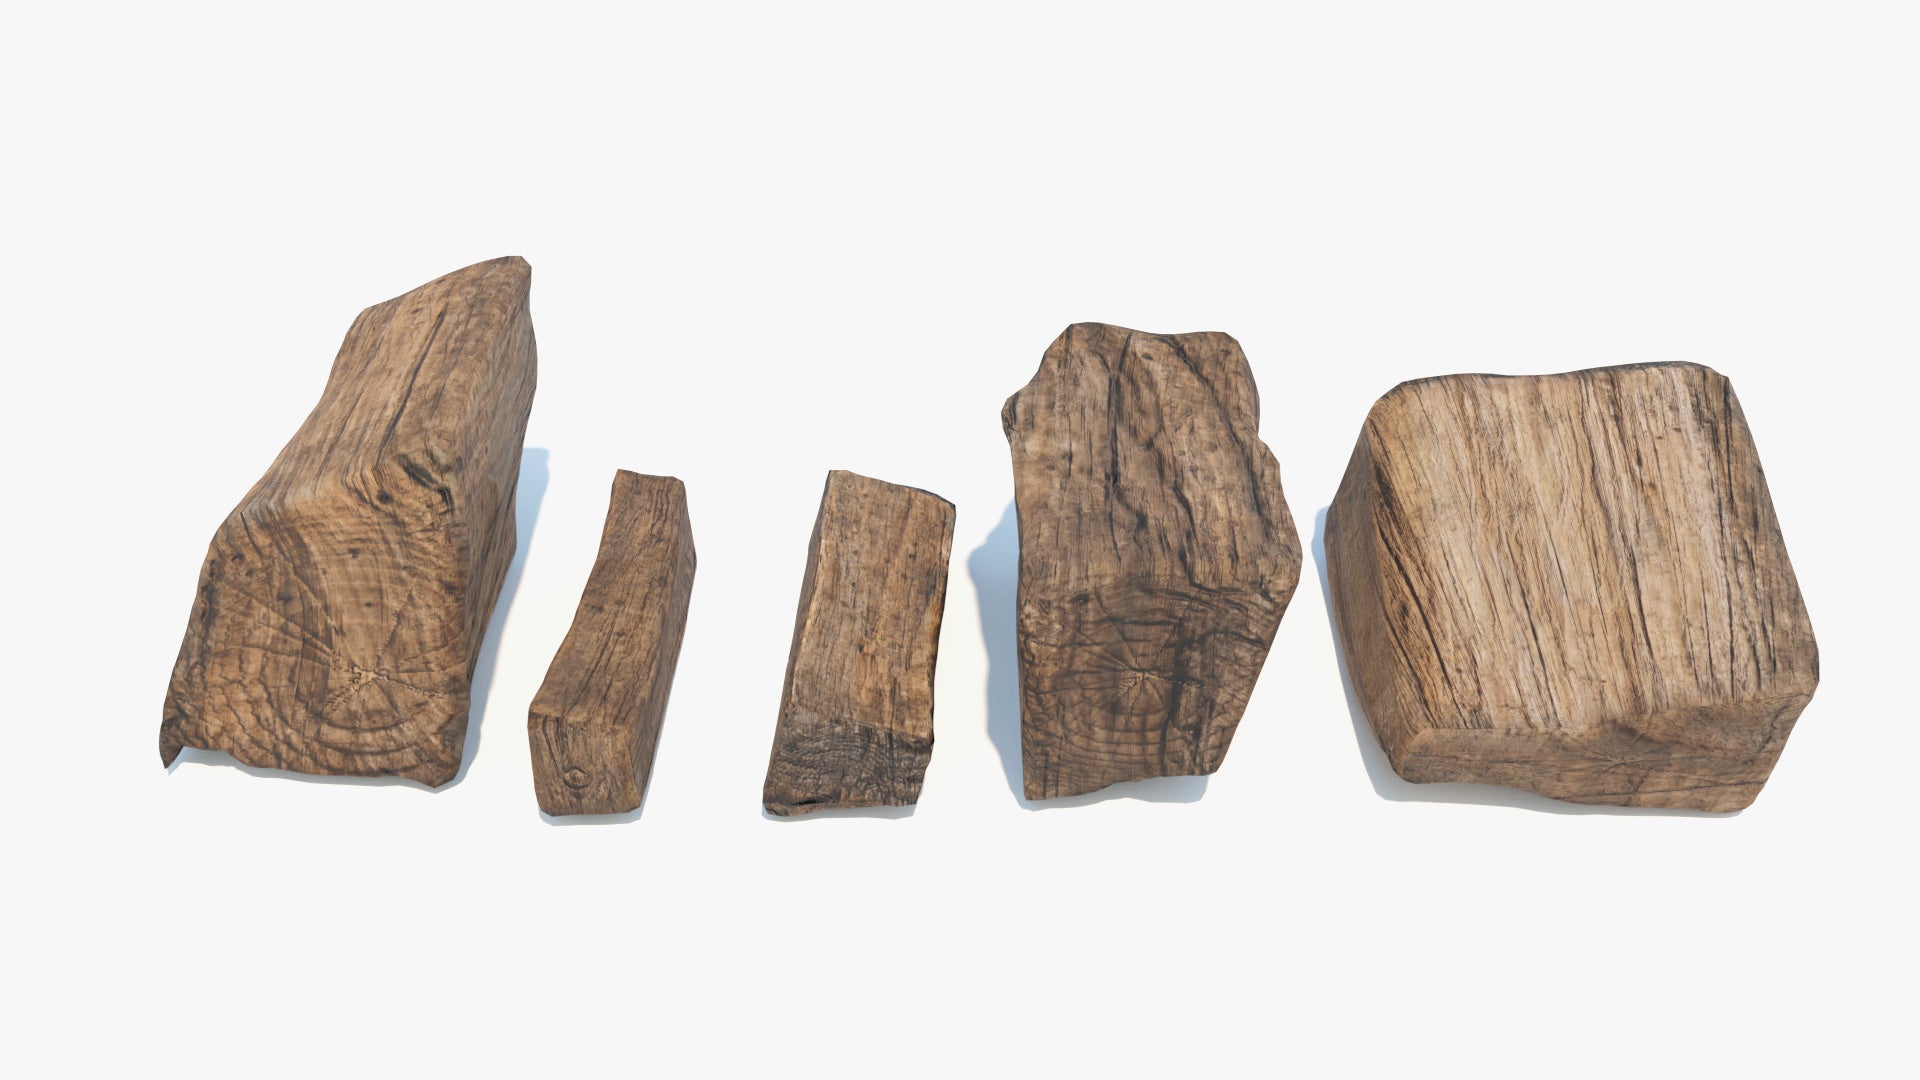 3D model of five pieces of lumber